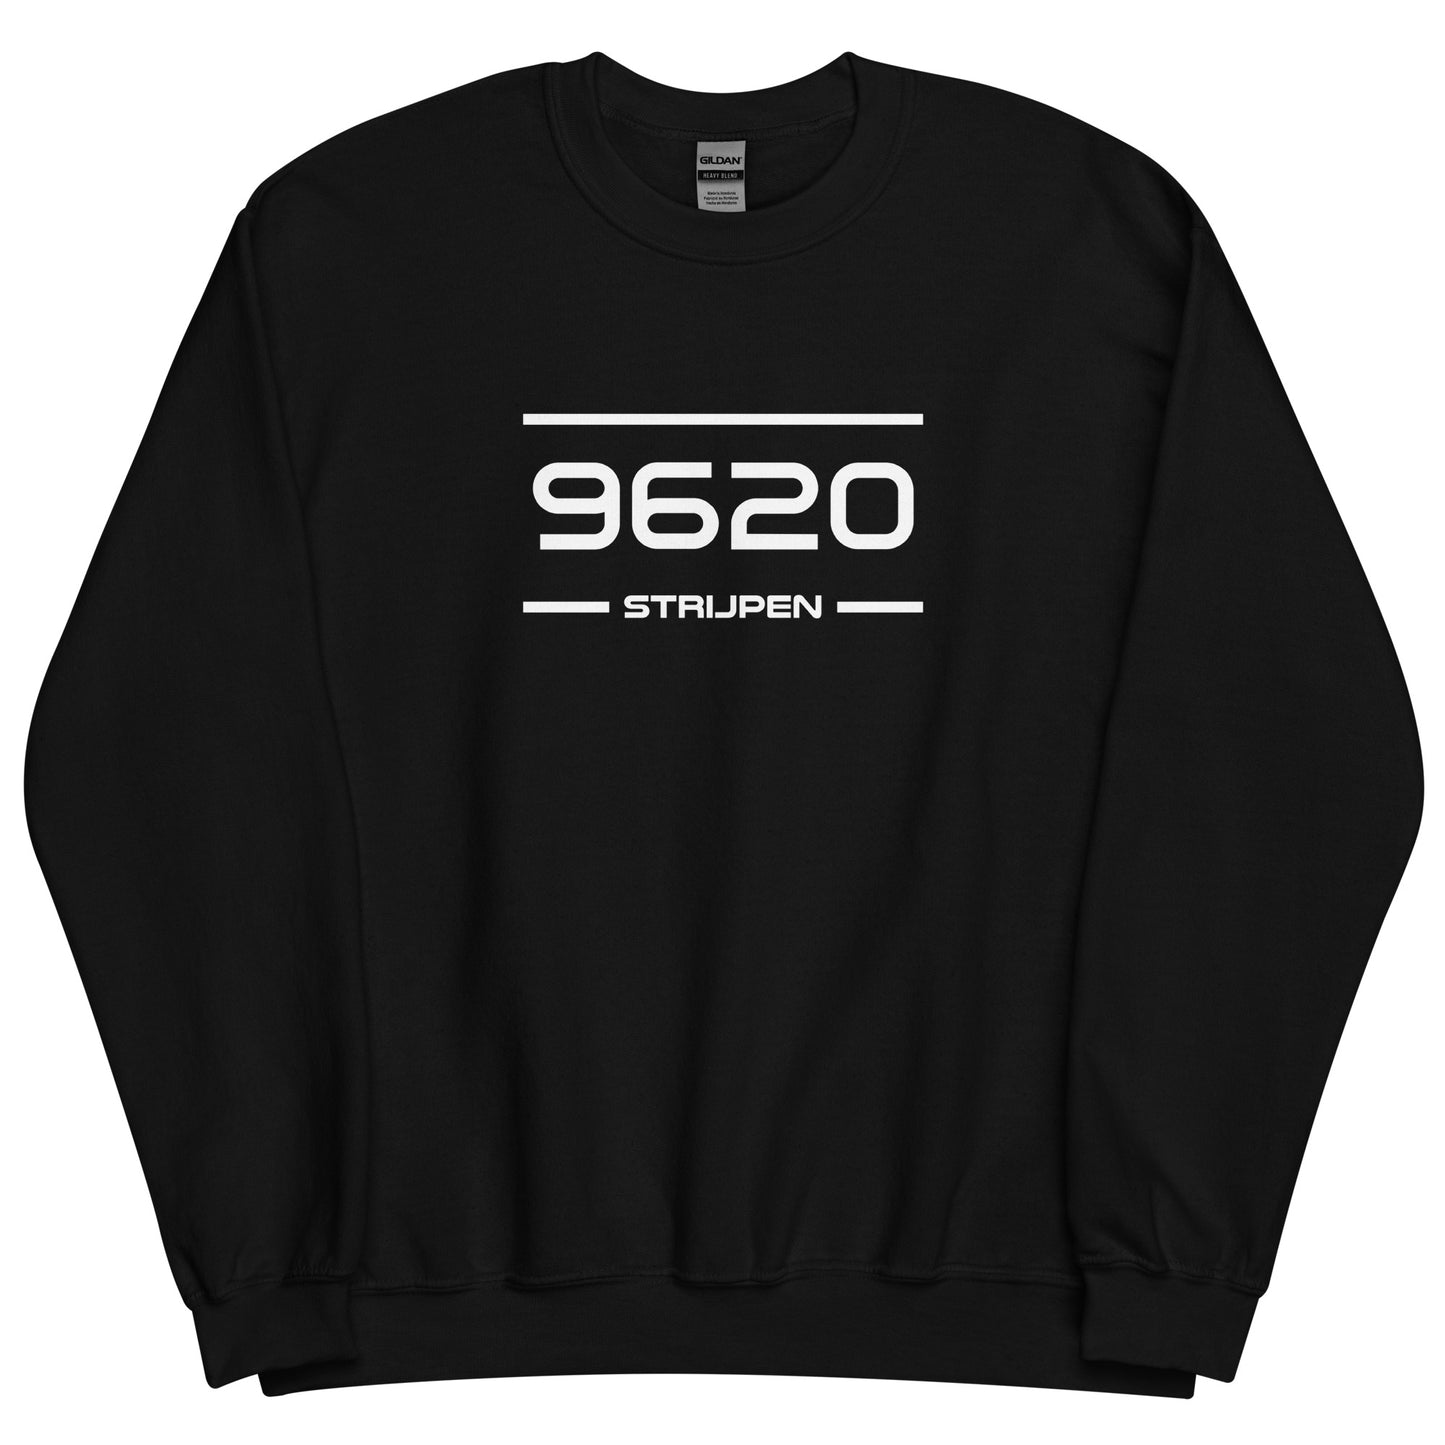 Sweater - 9620 - Strijpen (M/V)